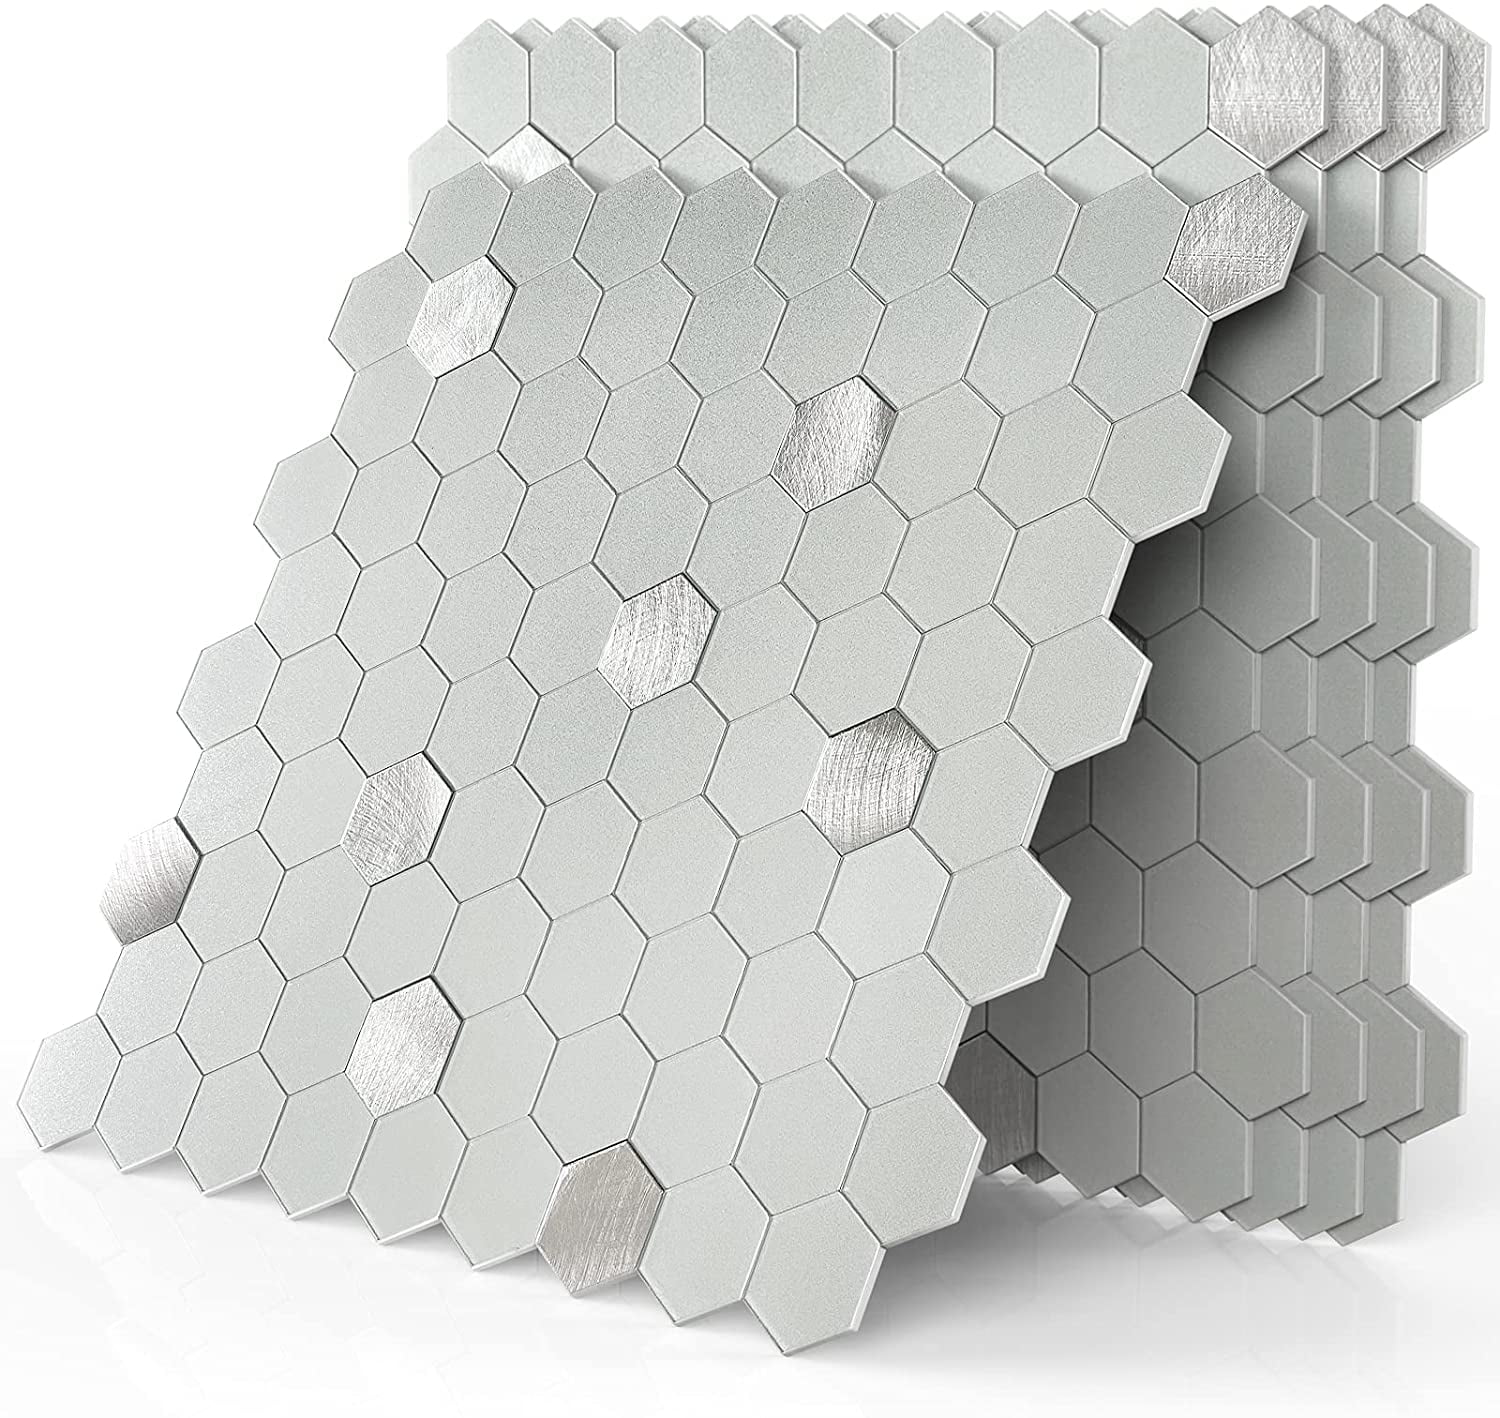 BeNice Peel and Stick Tile Backsplash Tile Adhesive Backsplash for  Kitchen,Stick Tiles for Bathroom Wall Stickers Hexagon Backsplash  Waterproof 